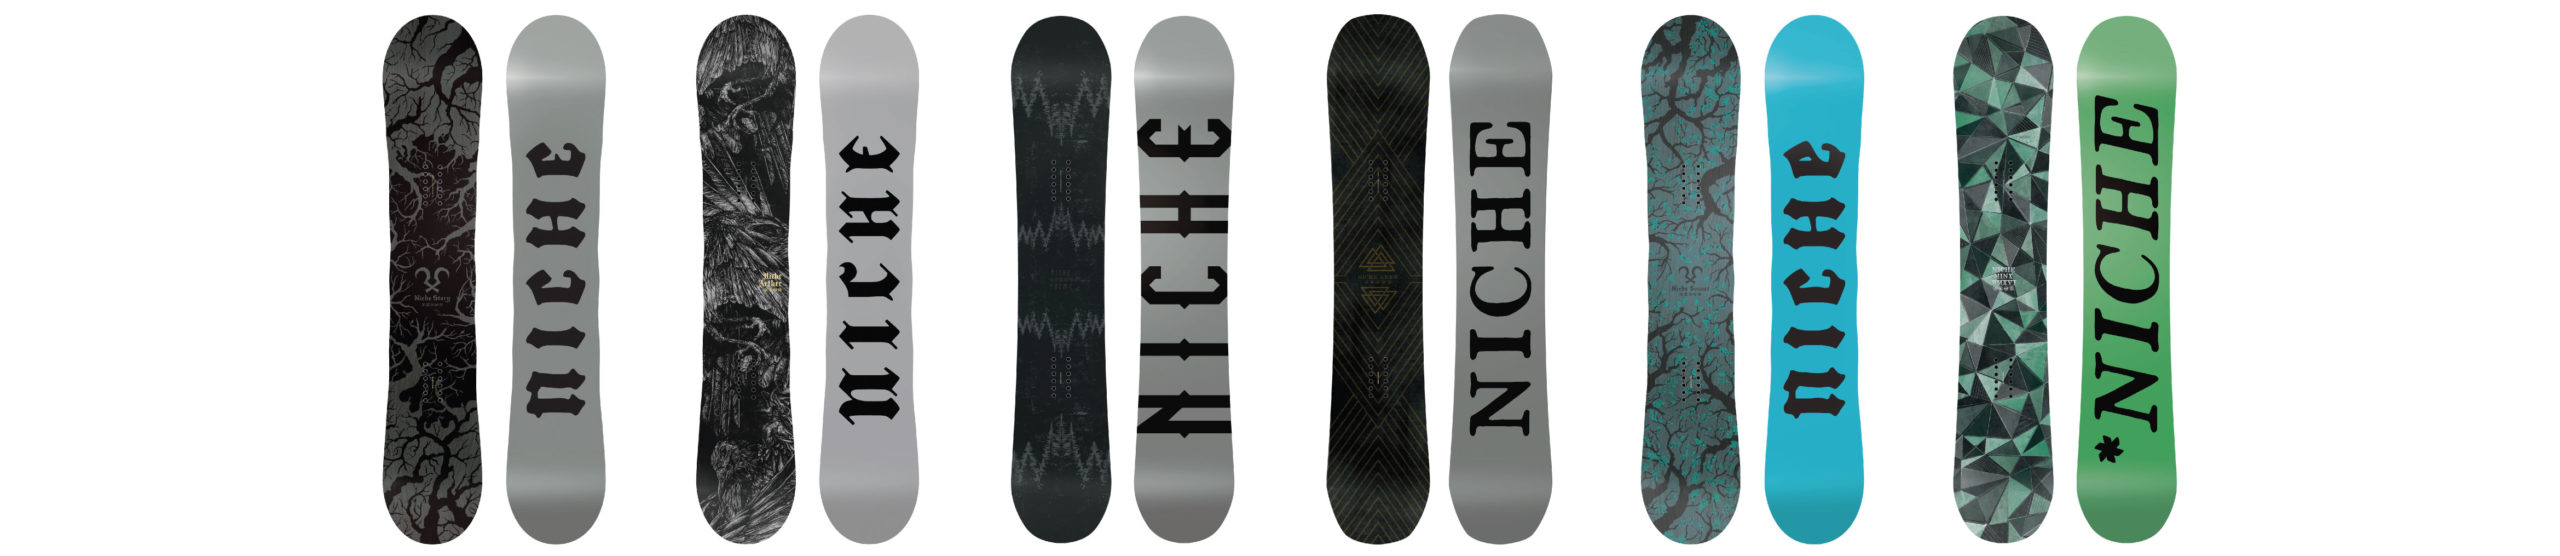 2015/16 Niche Snowboards graphics